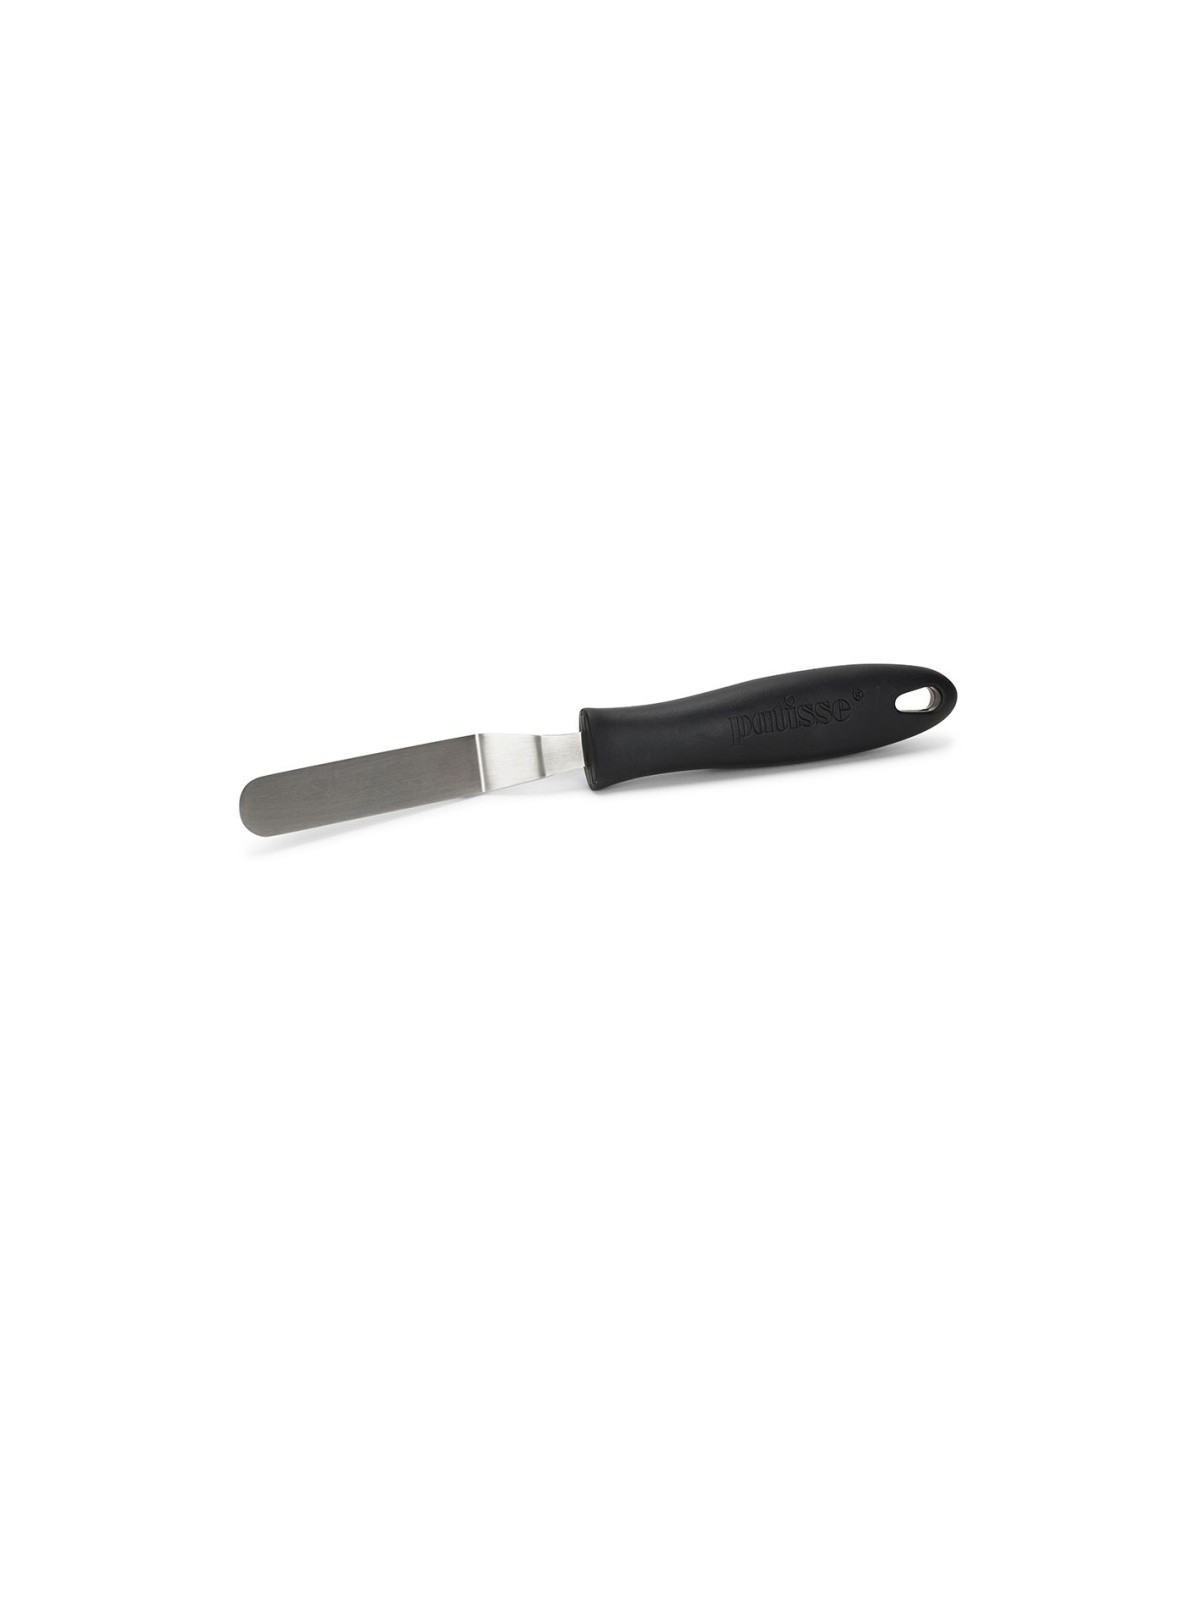 Patisse angled spatula RVS - gebogen - 11cm